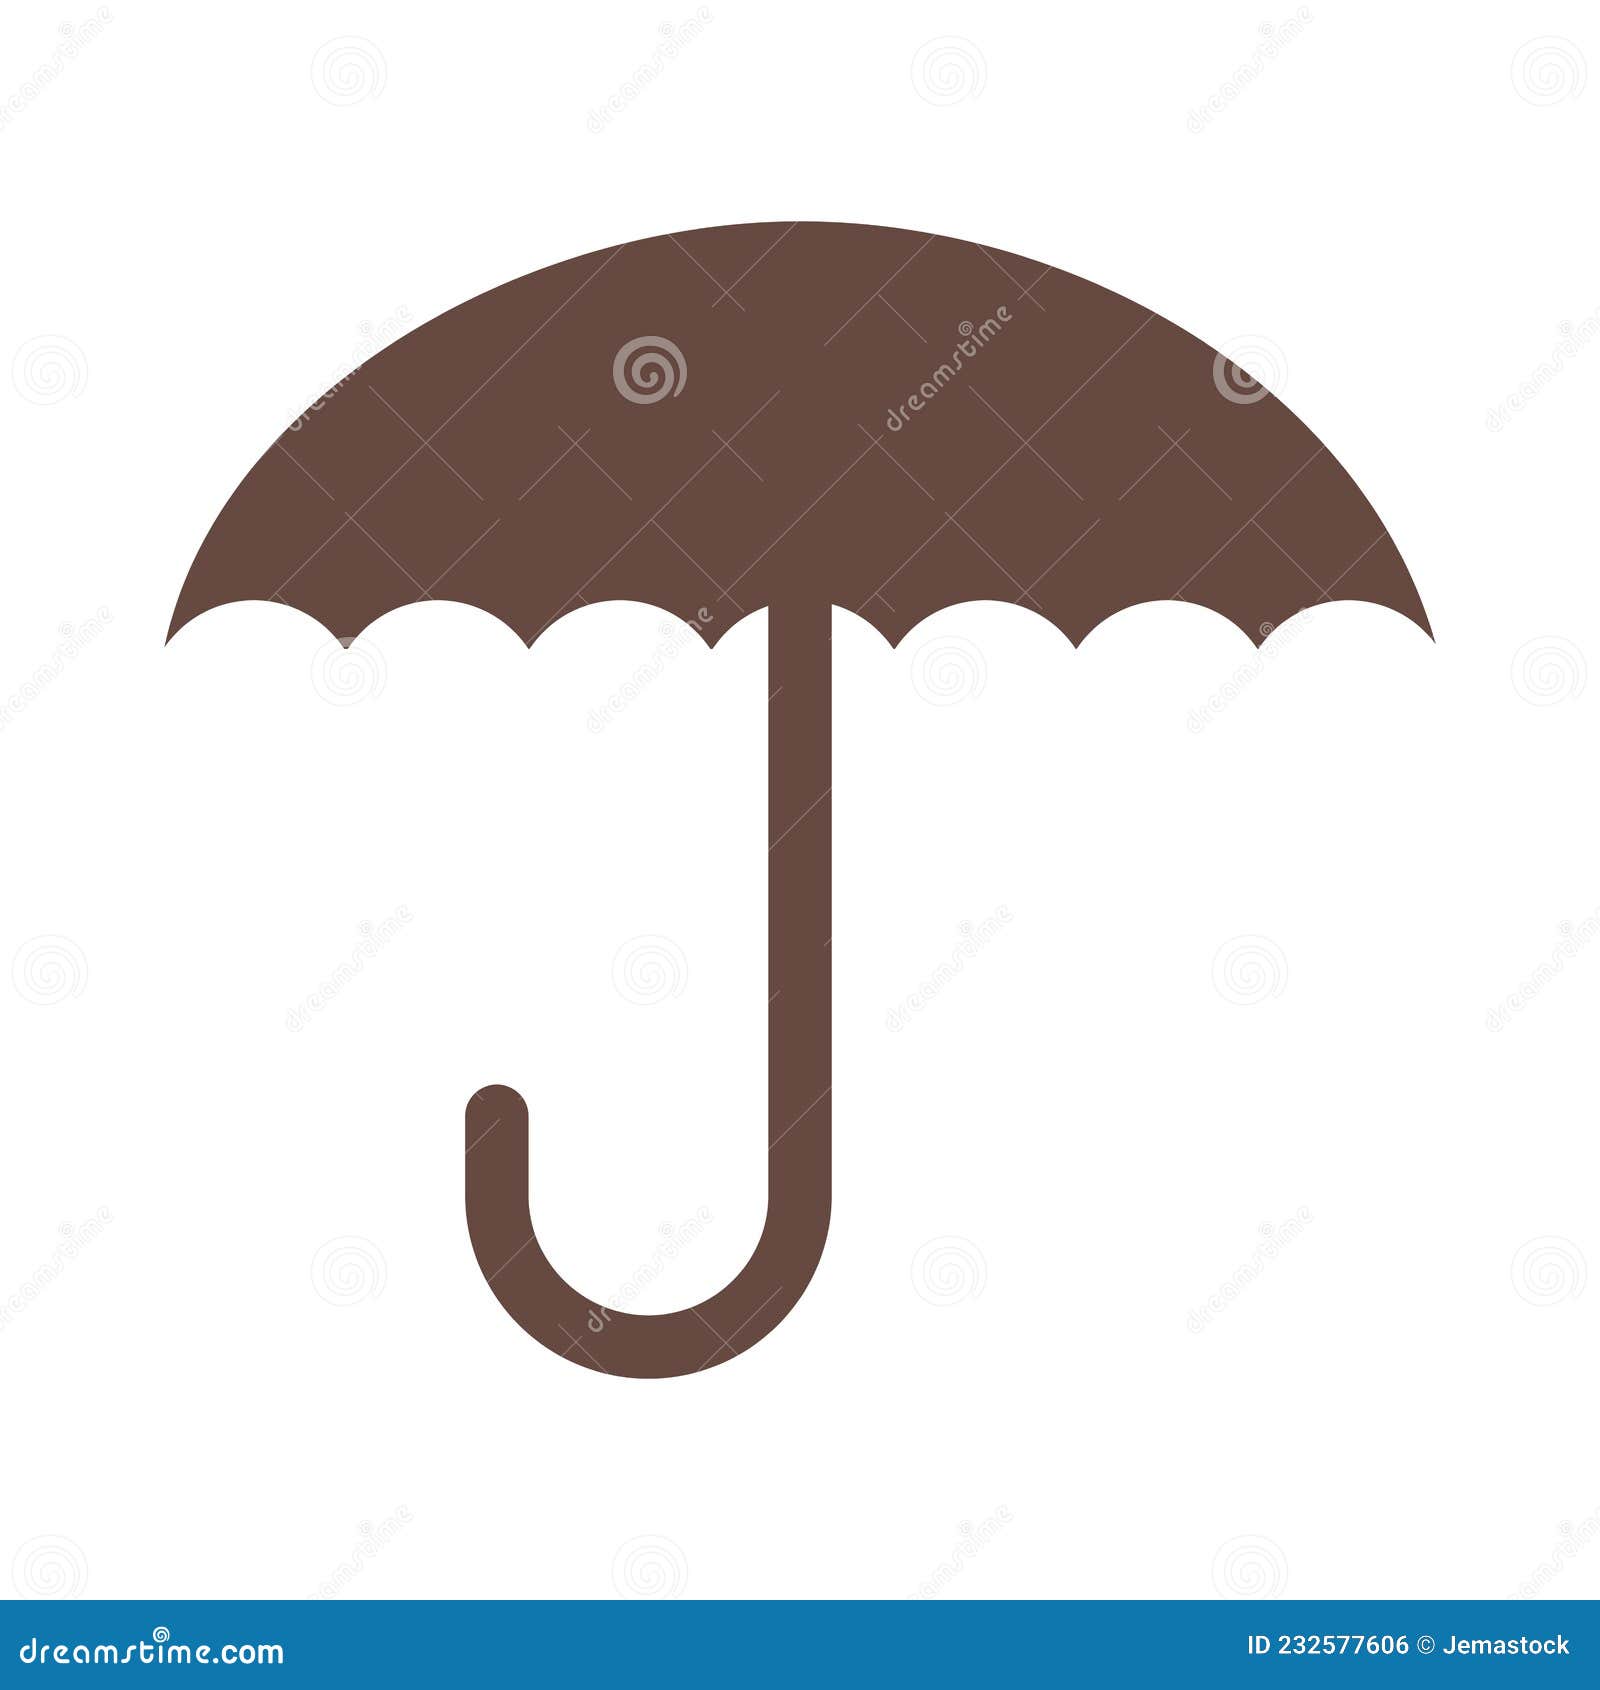 Umbrella Silhouette - Free vector graphic on Pixabay